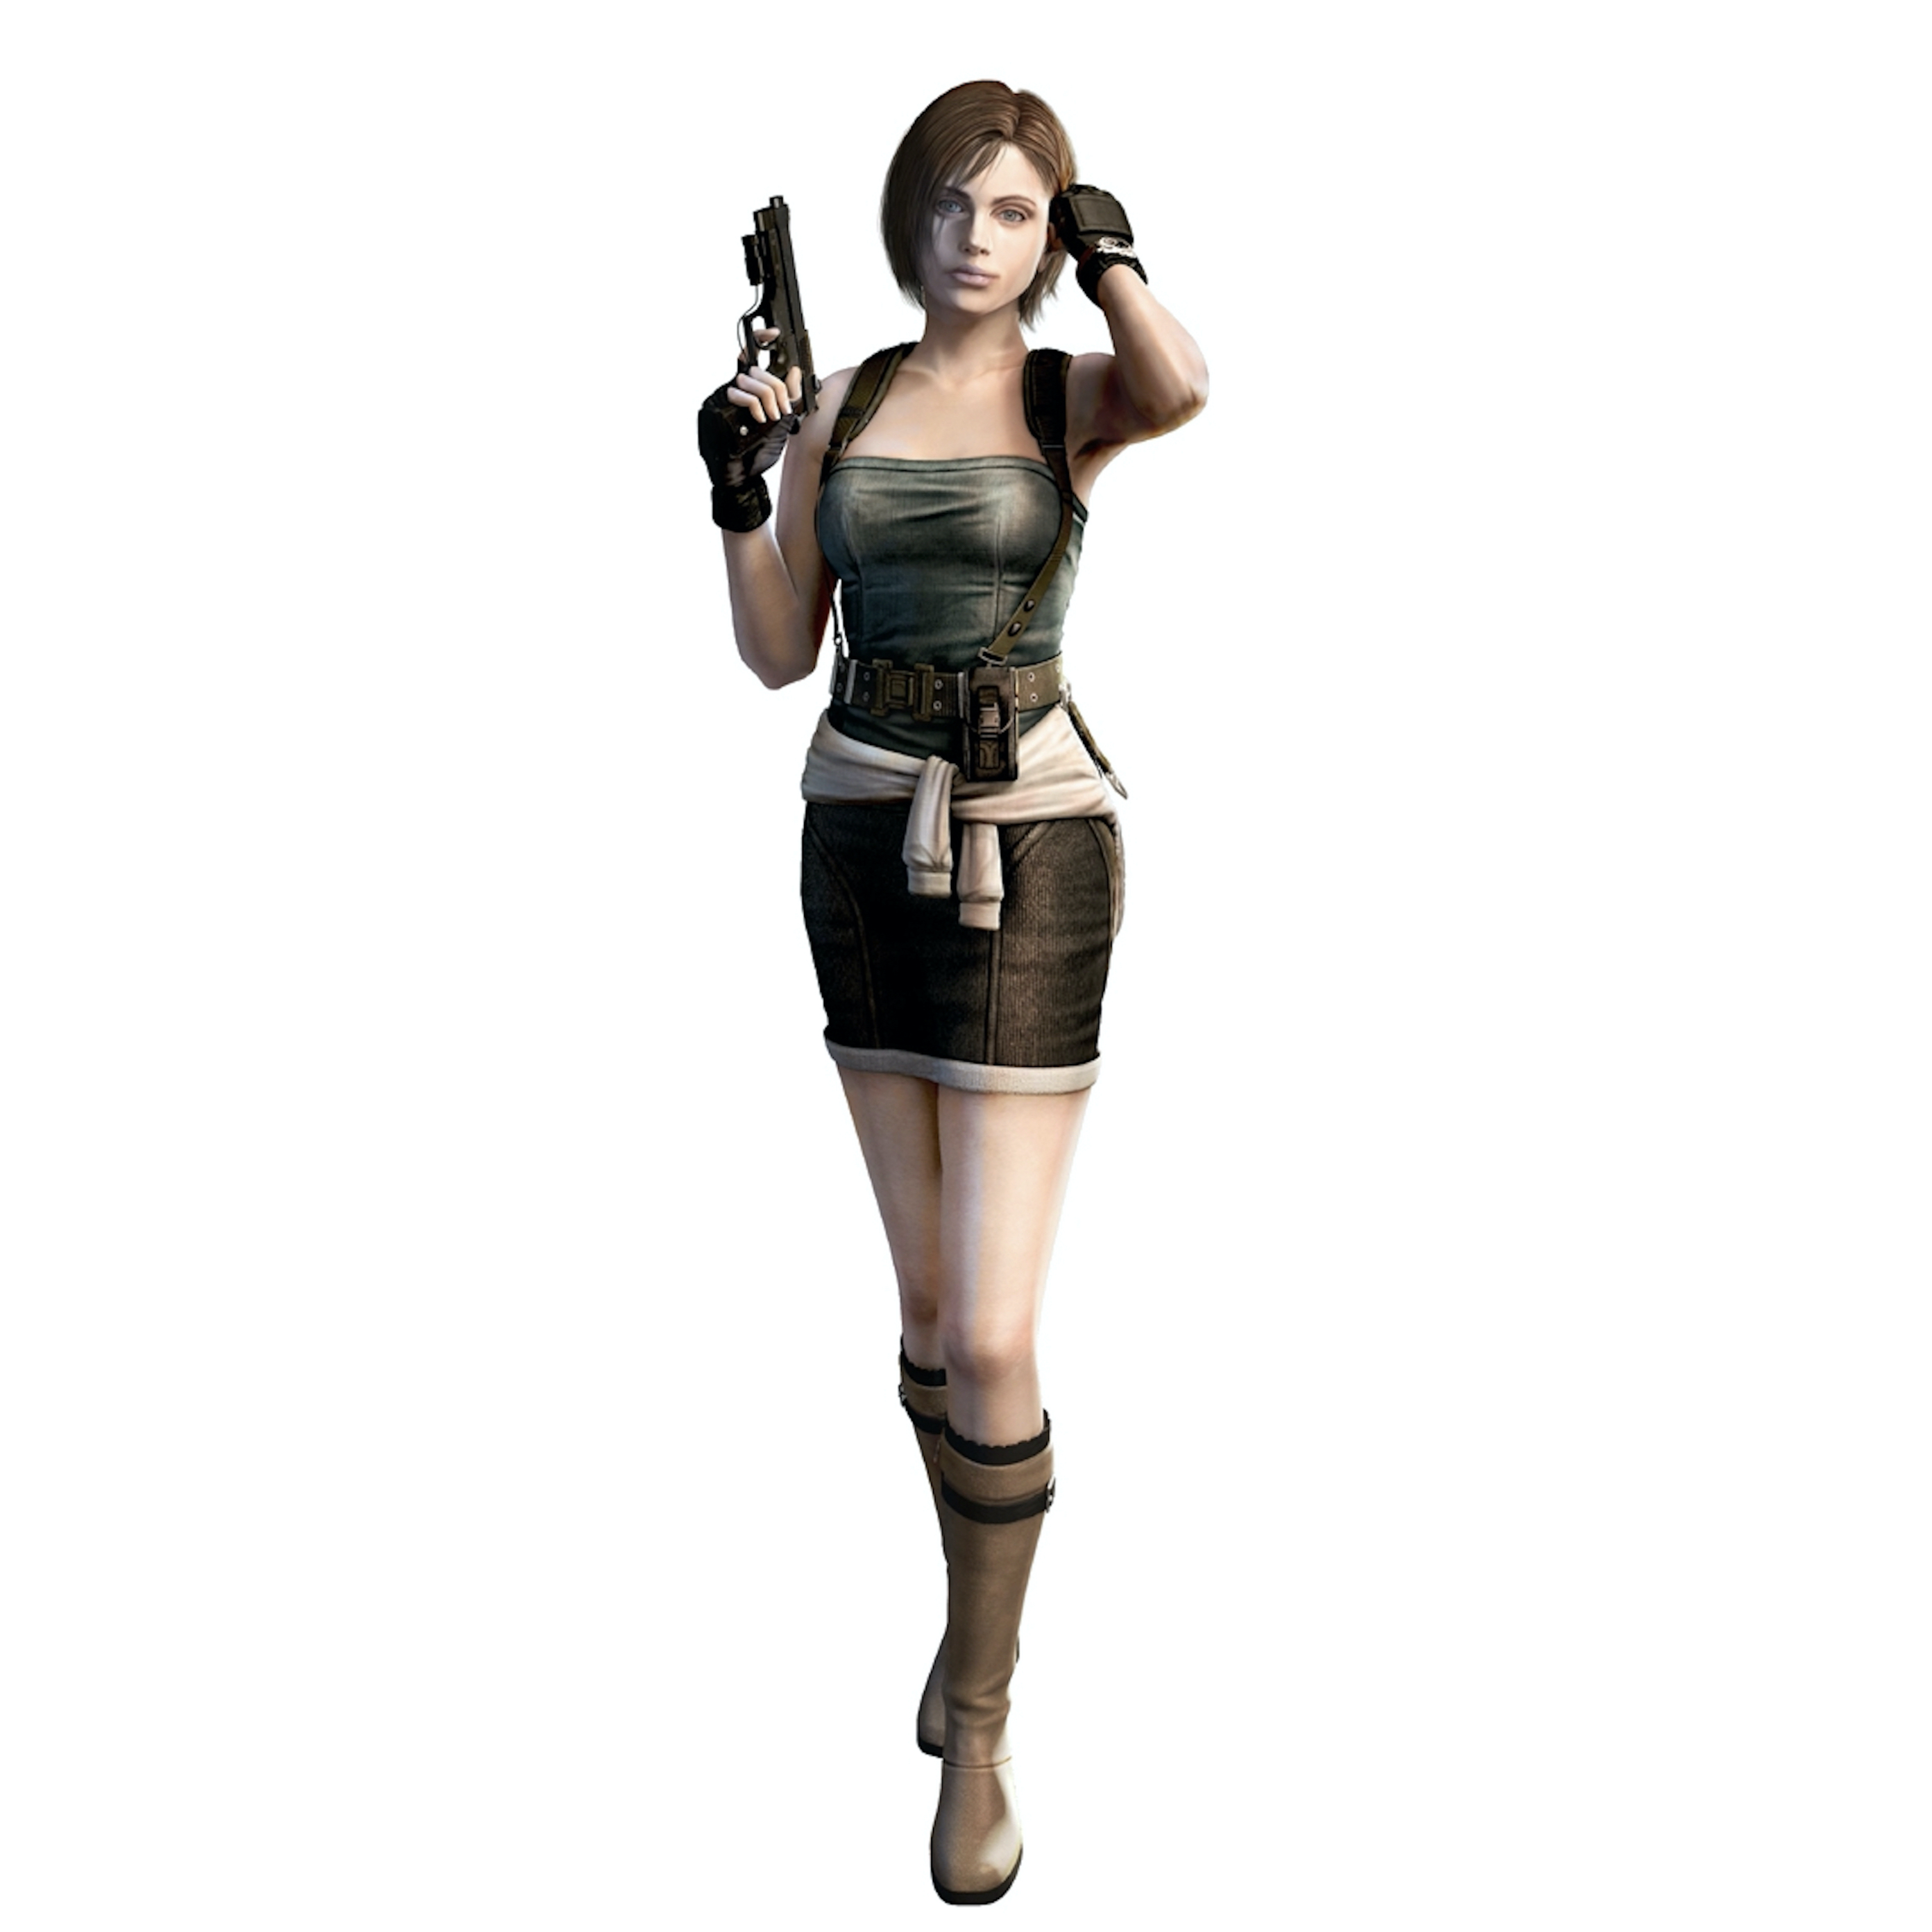 Jill Valentine - Resident Evil 3: Nemesis Outfit